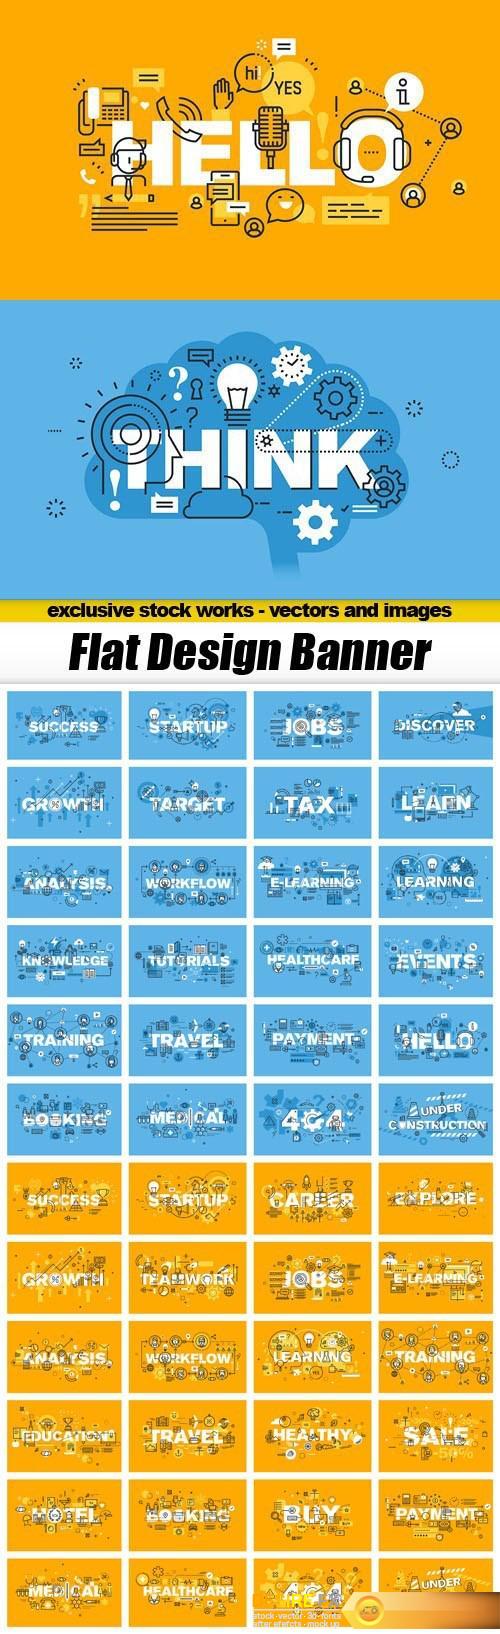 Flat Design Banner - 50 EPS